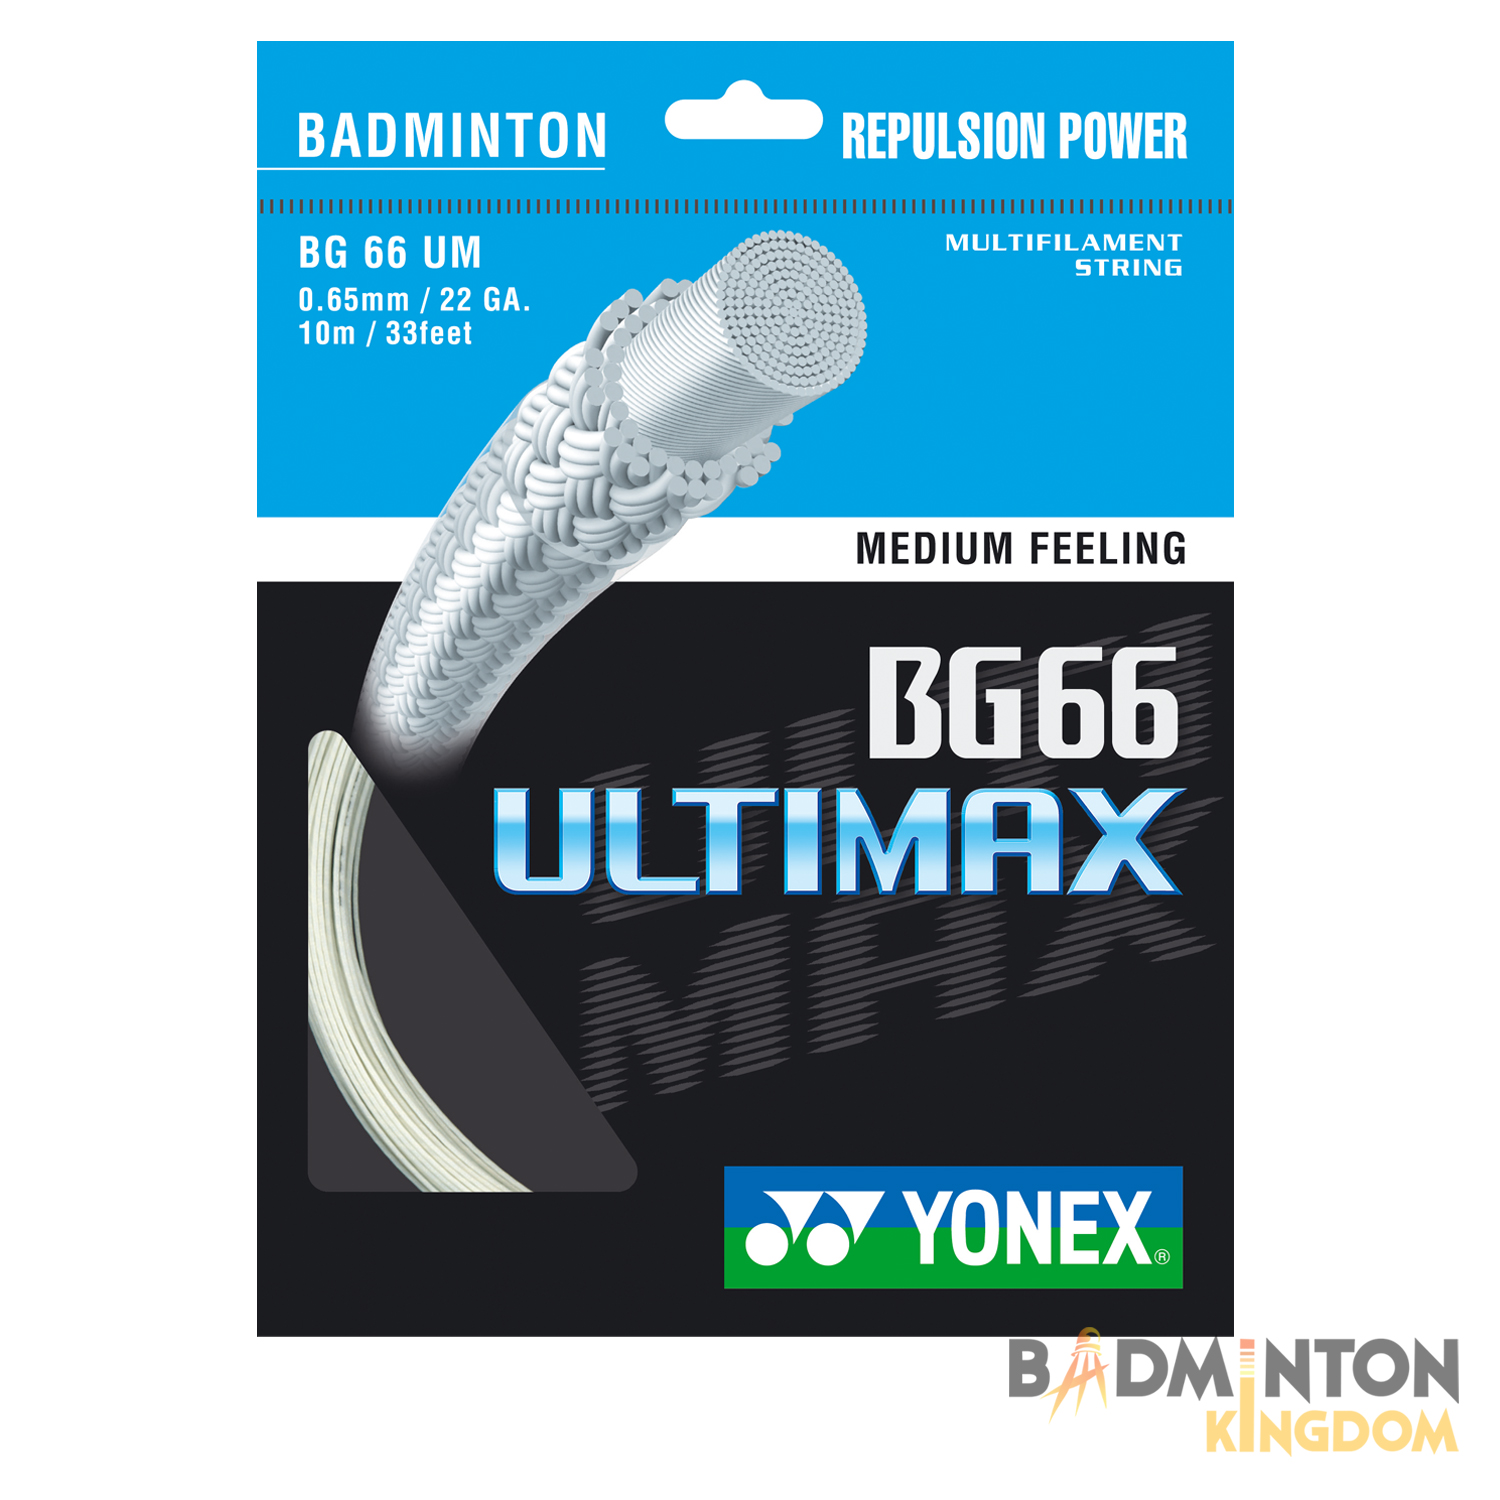 yonex-bg66-ultimax-badminton-string-single-set